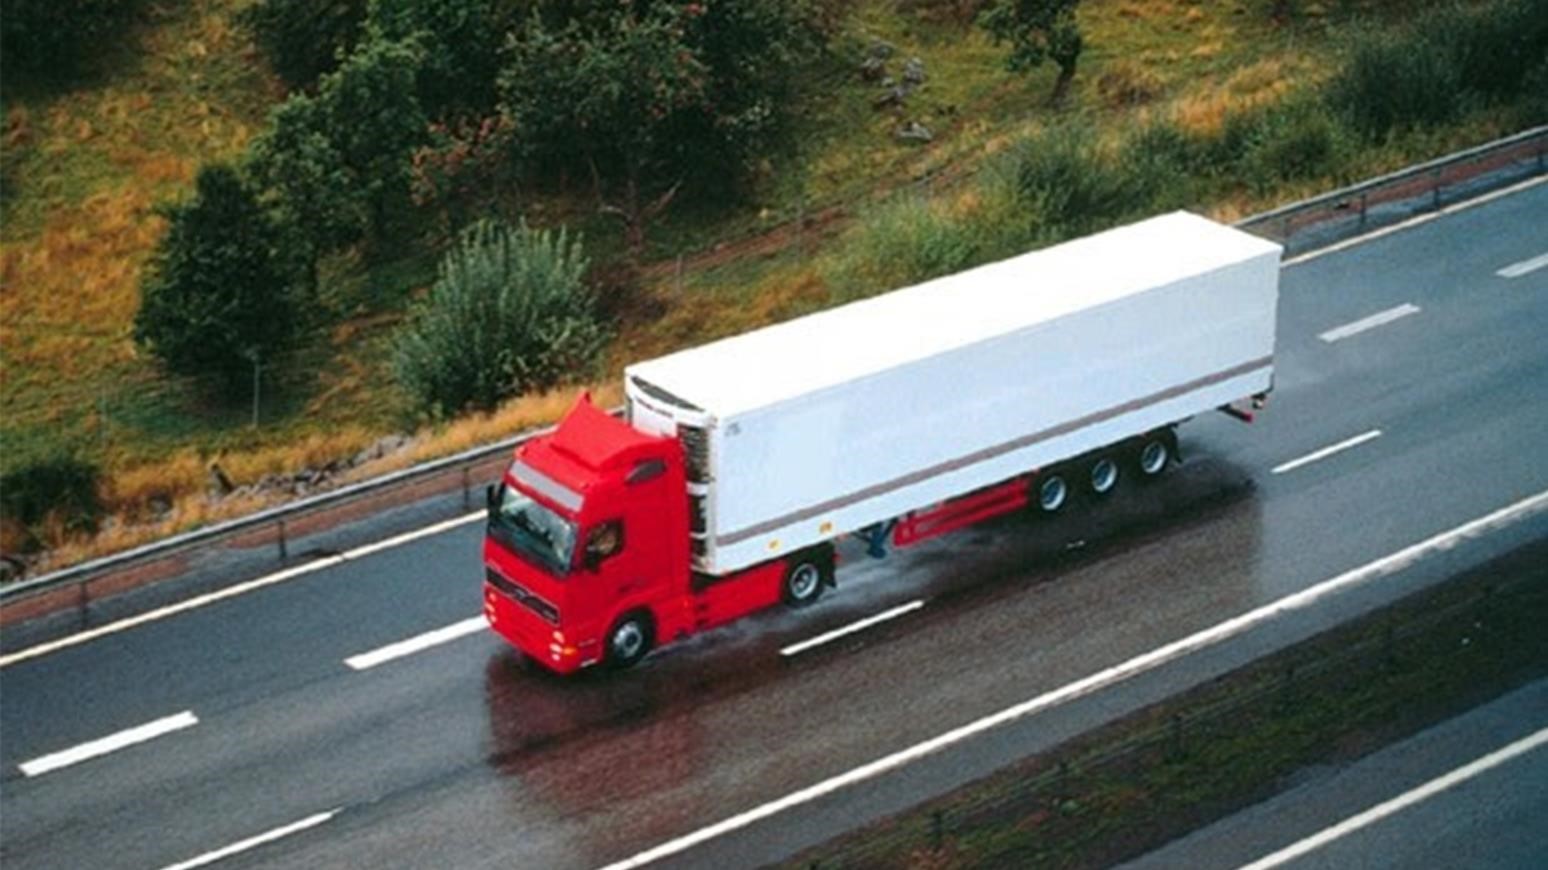 Chartered Institute of Logistics & Transport Offers Coronavirus Information For Logistics Professionals